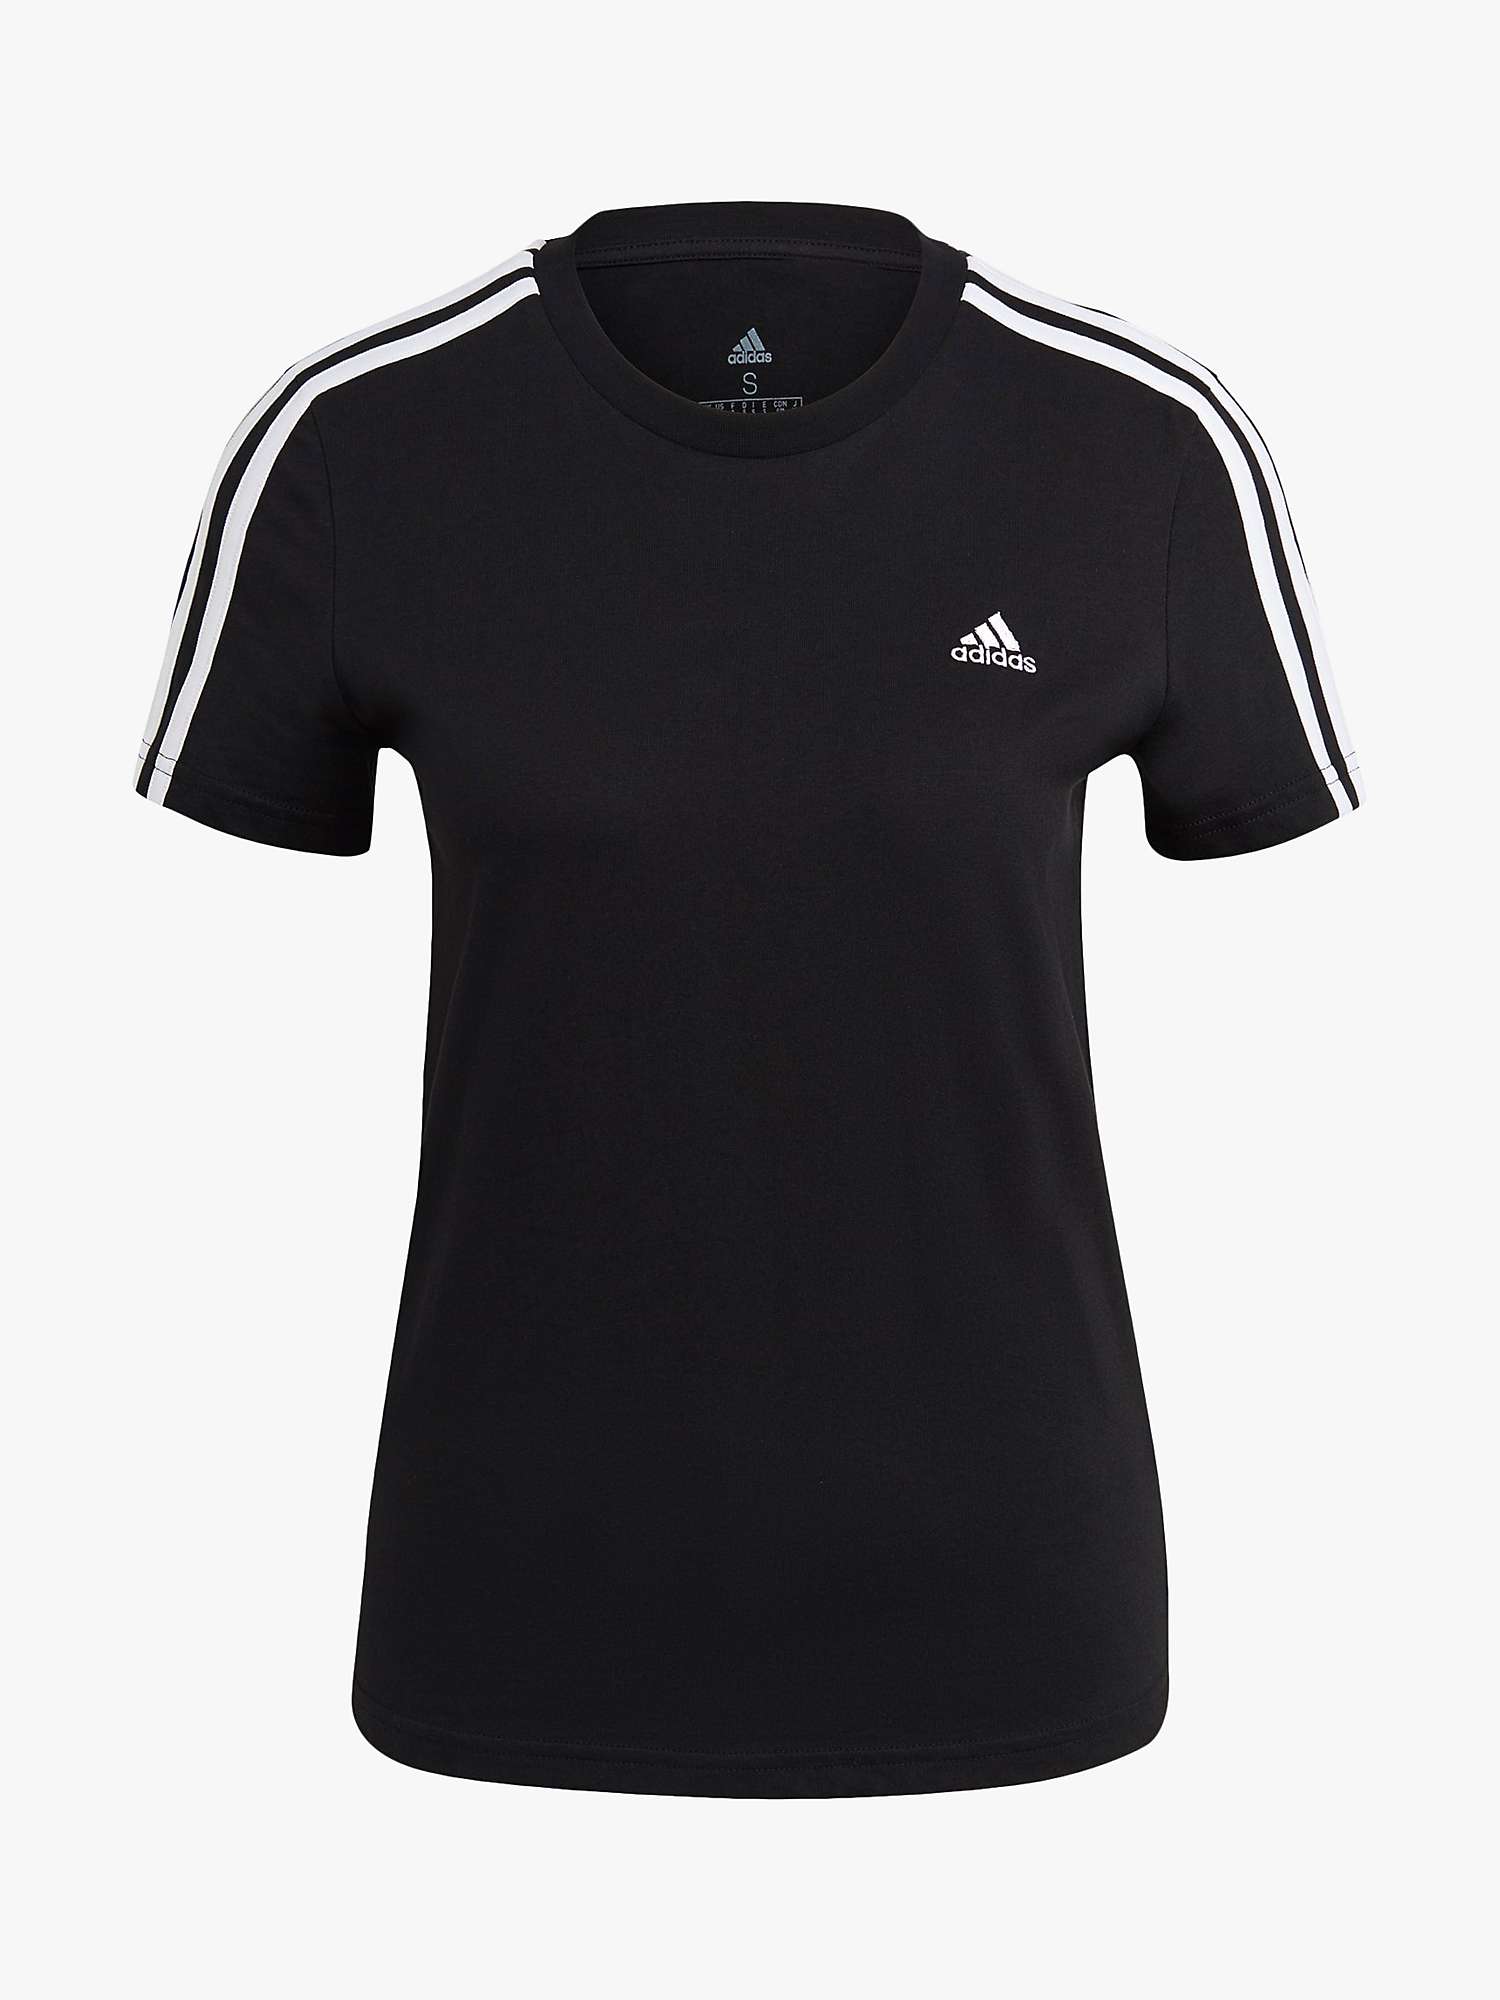 adidas LOUNGEWEAR Essentials Slim 3-Stripes T-Shirt, Black/White at ...